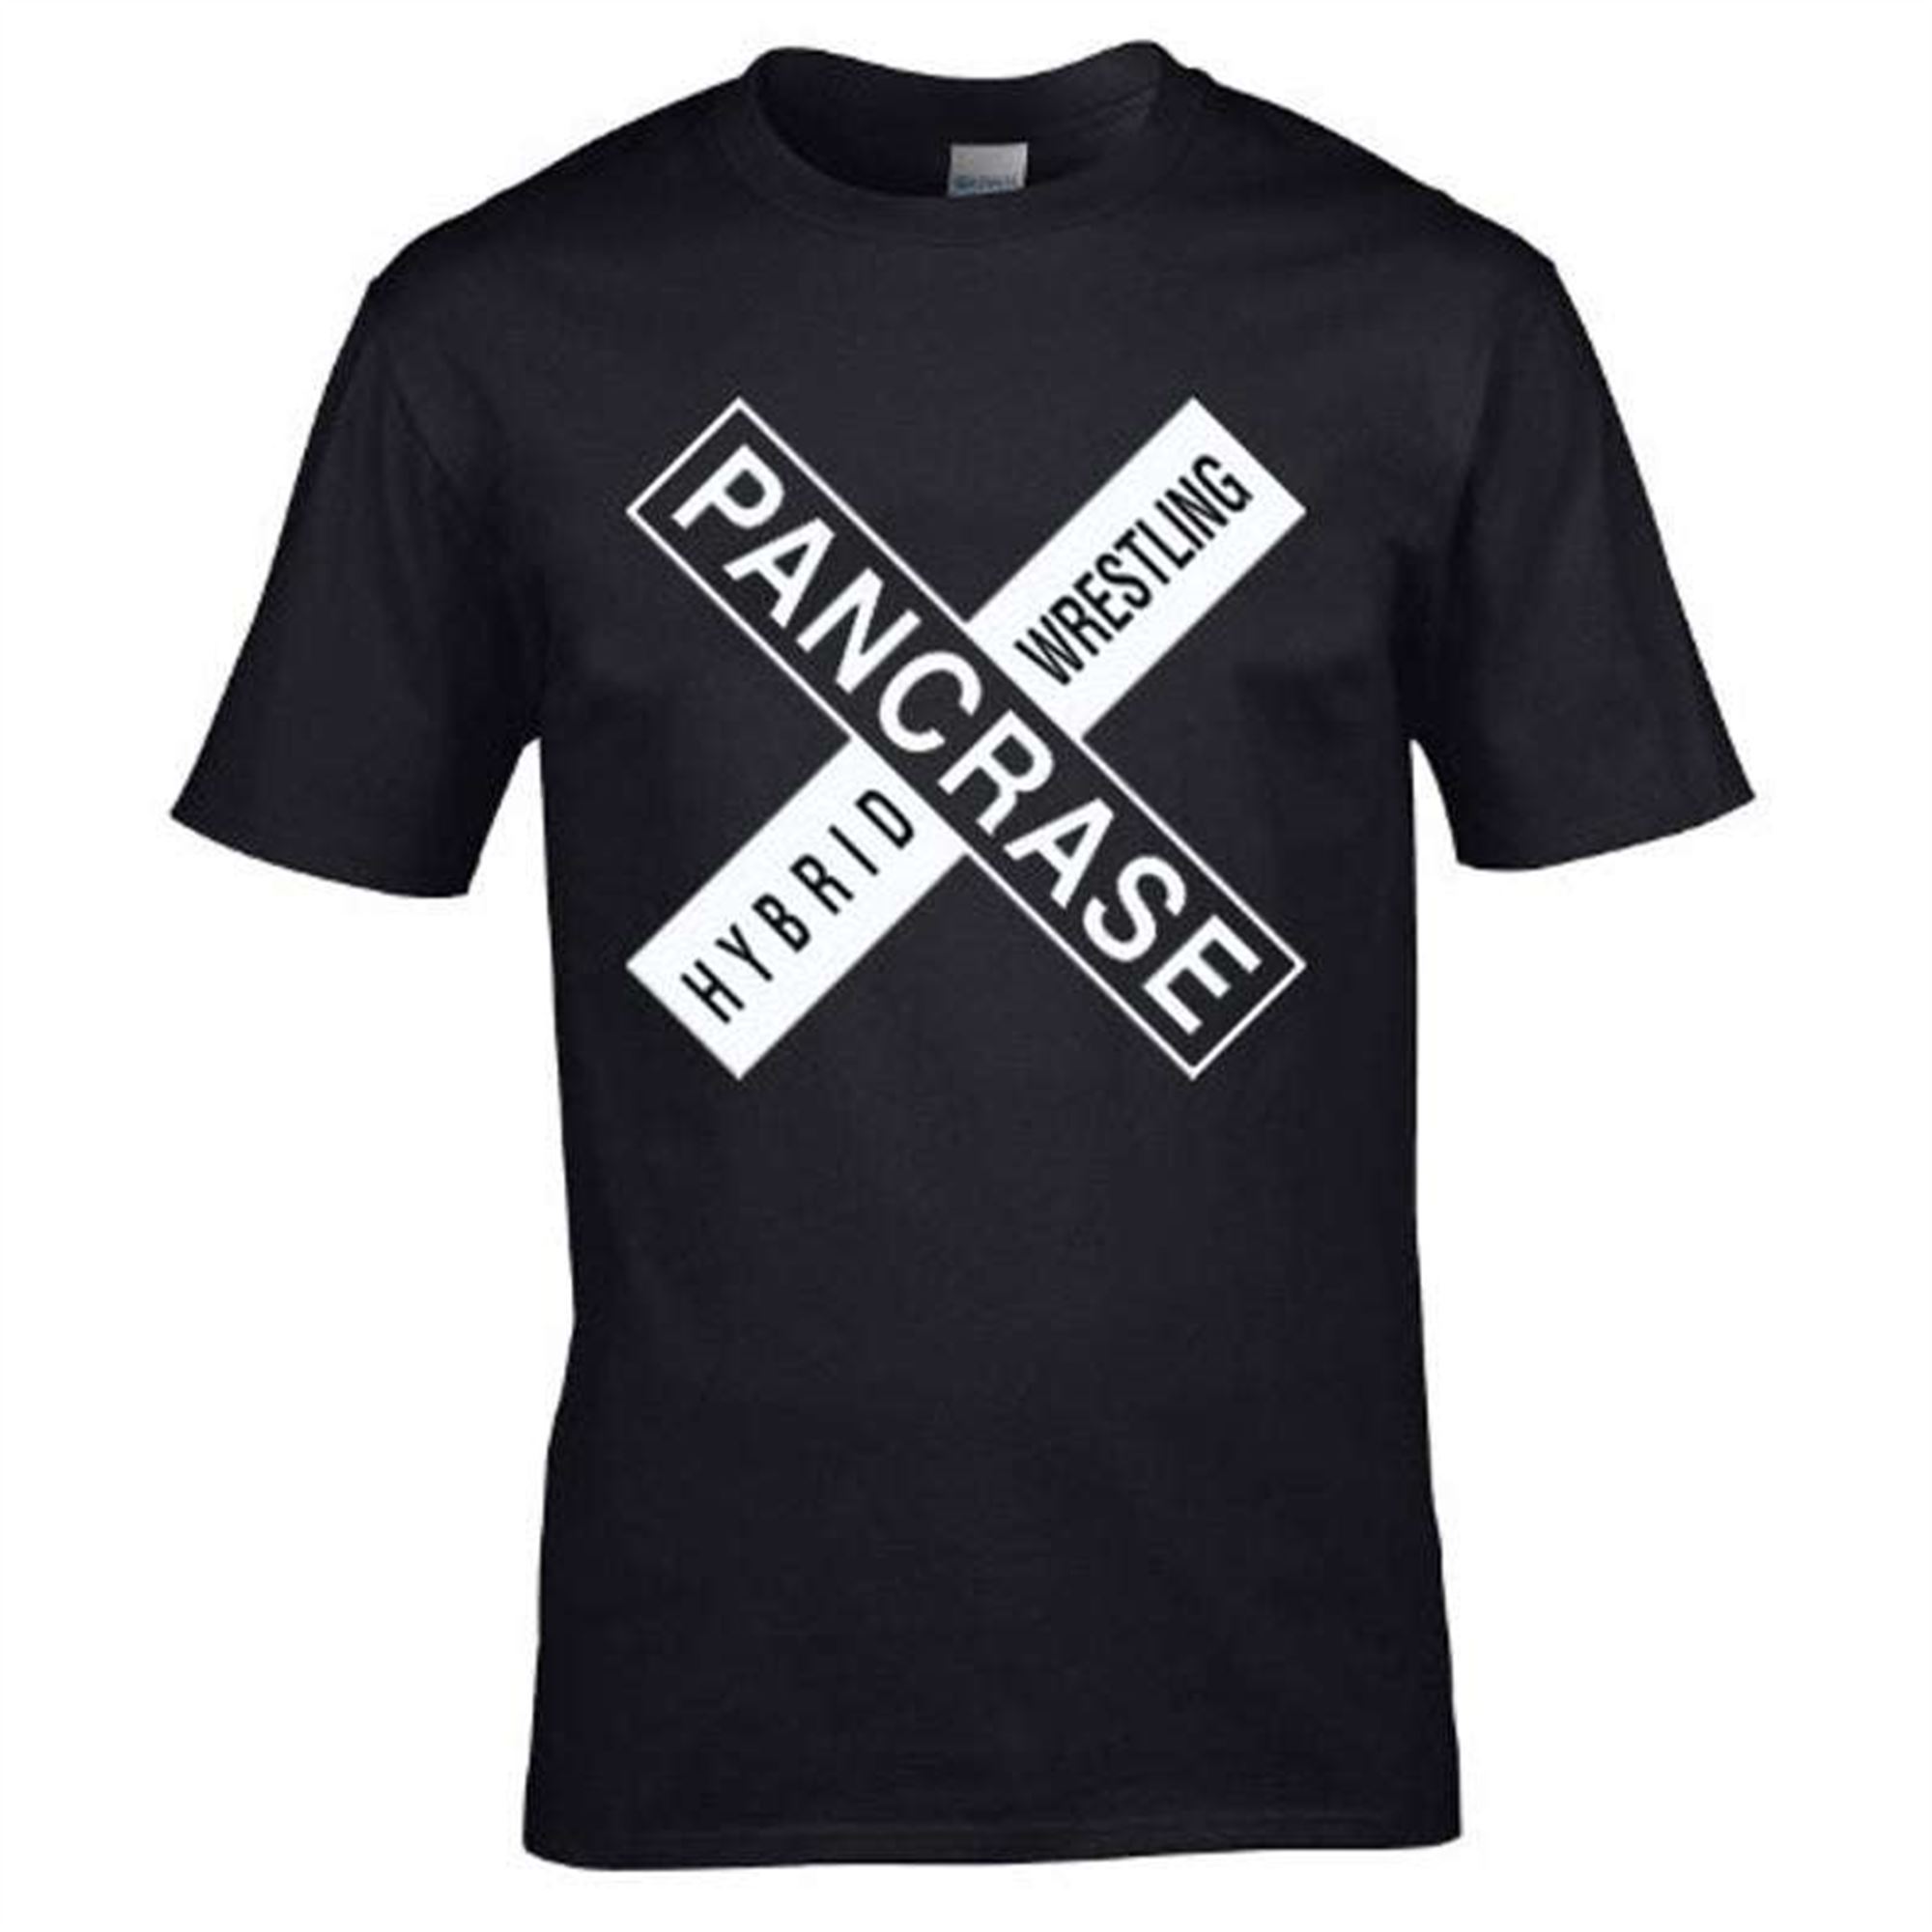 Pancrase Hybrid Wrestling Mma T-shirt Size Up To 5xl